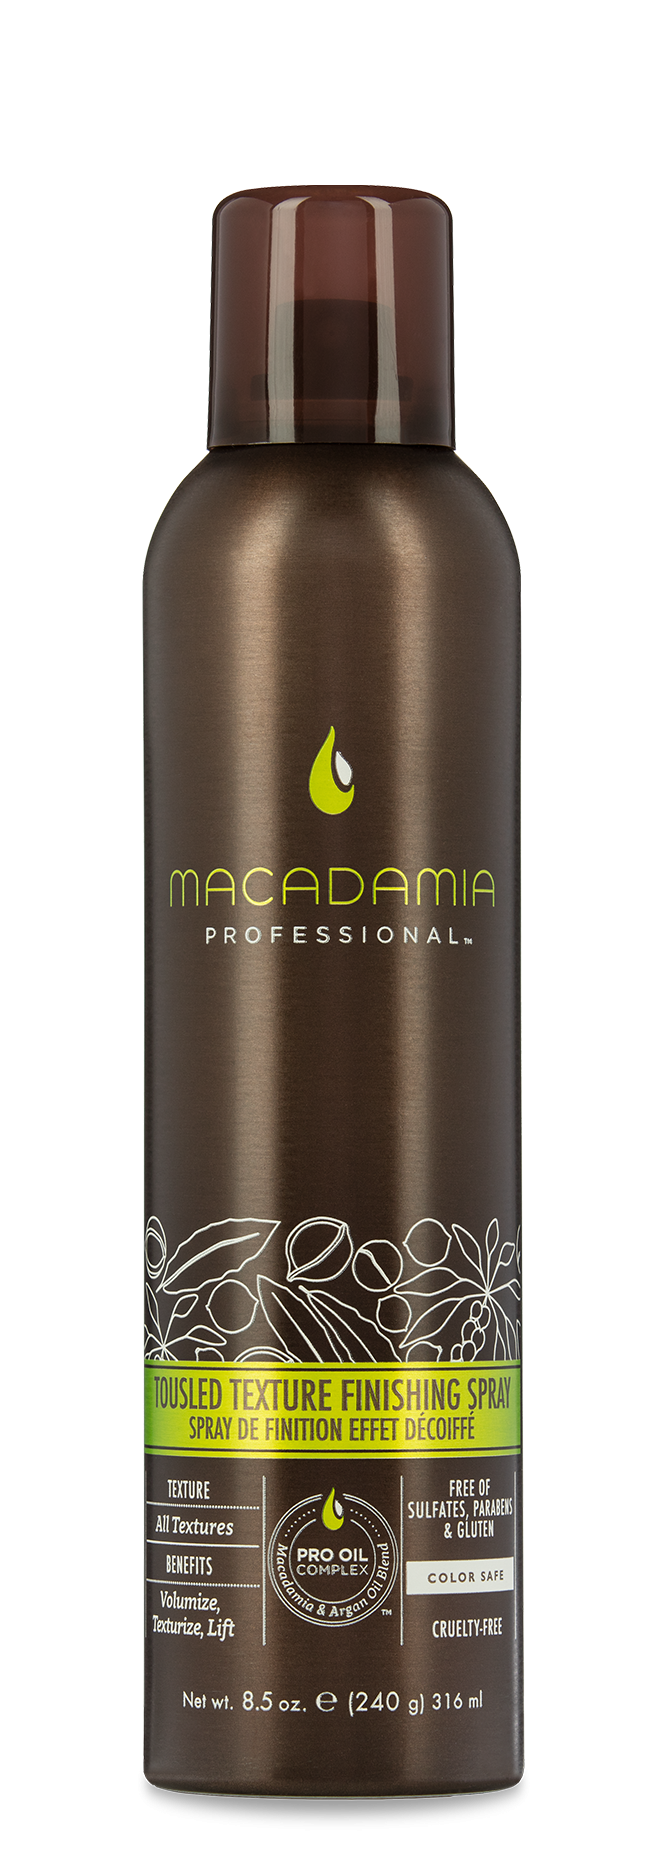 Macadamia Professional Tousled Texture Finishing Spray